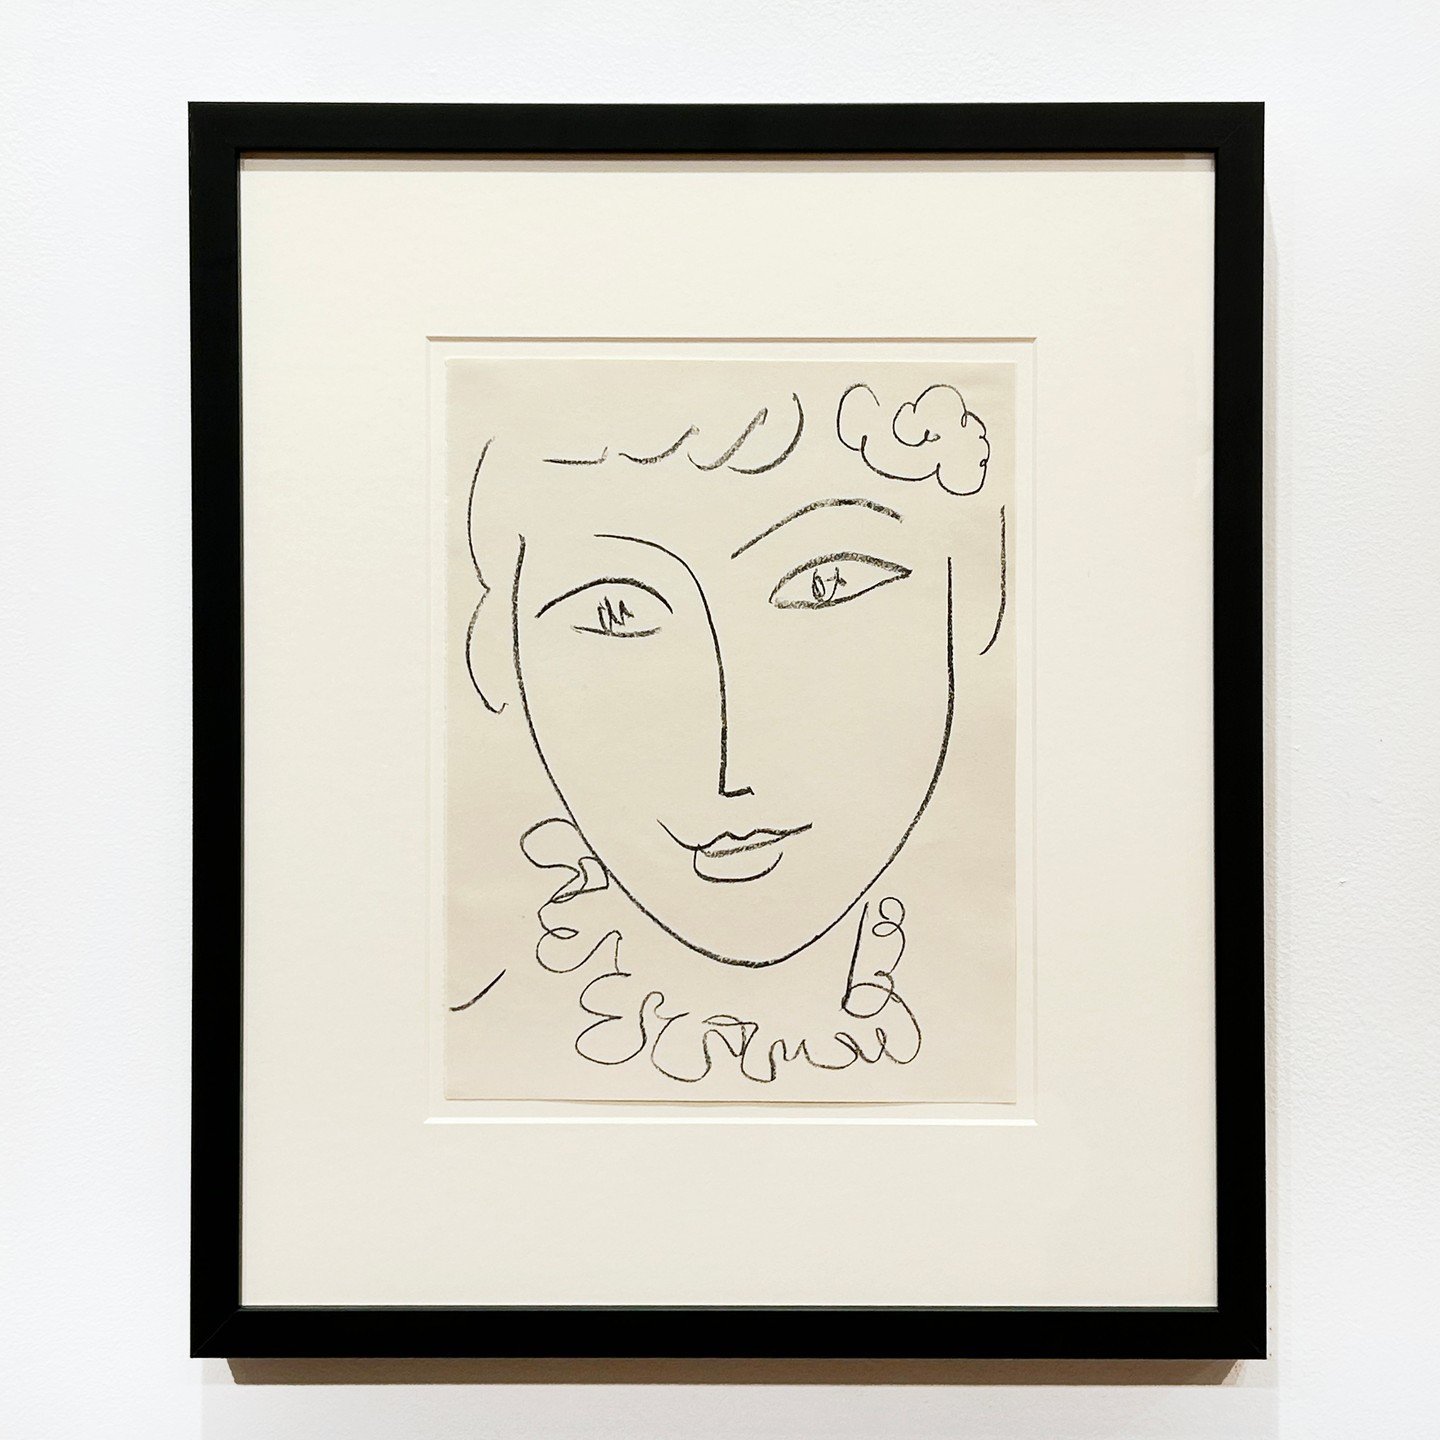 Celebrate your Saturday with this beautiful #Matisse print in #Boston ✨

Link in bio and DM for inquiries.
.
.
.
#dtrmodern #artgallery #bostonart #modernmaster #henrimatisse #figurativeart #artoftheday #artdaily #artcollector #interiordesign #artadv